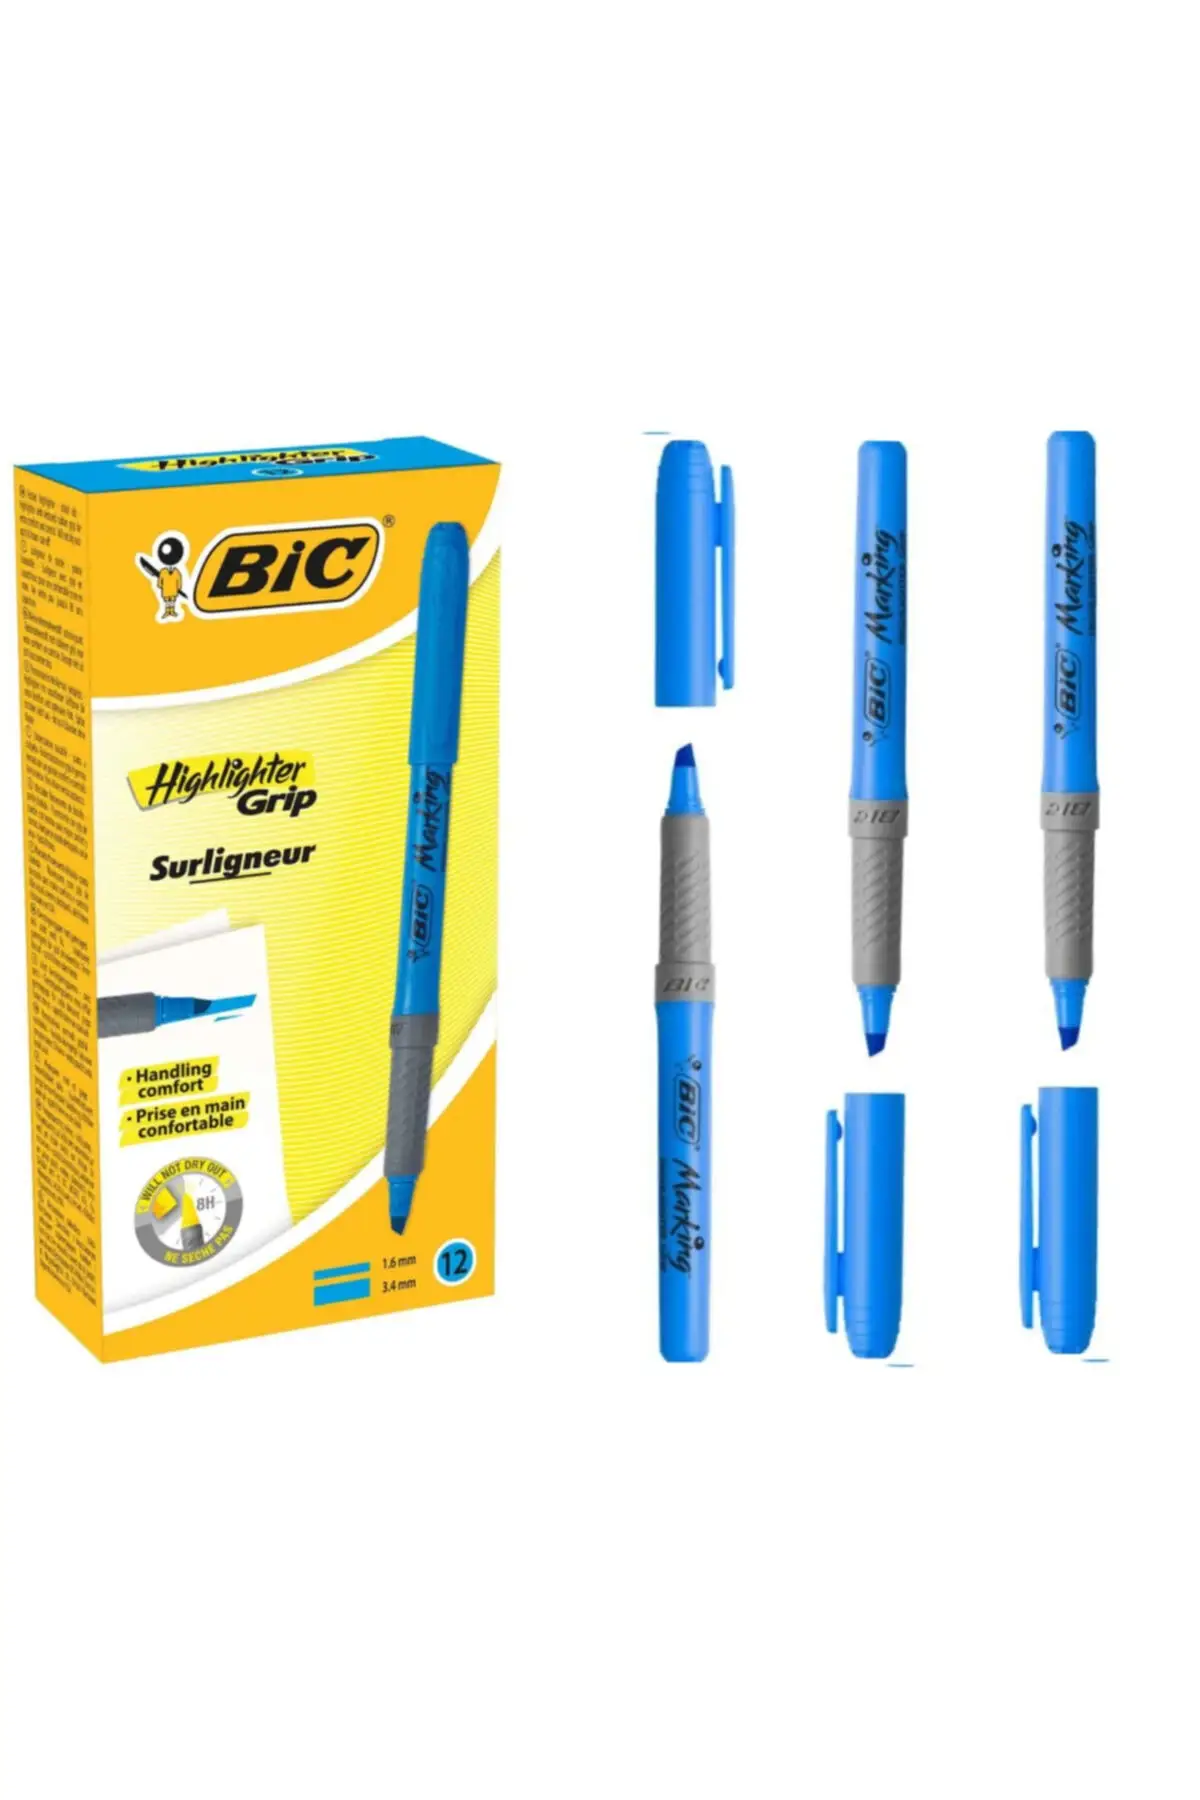 

Bic Highlighter Grip Surligneur 12 PCS